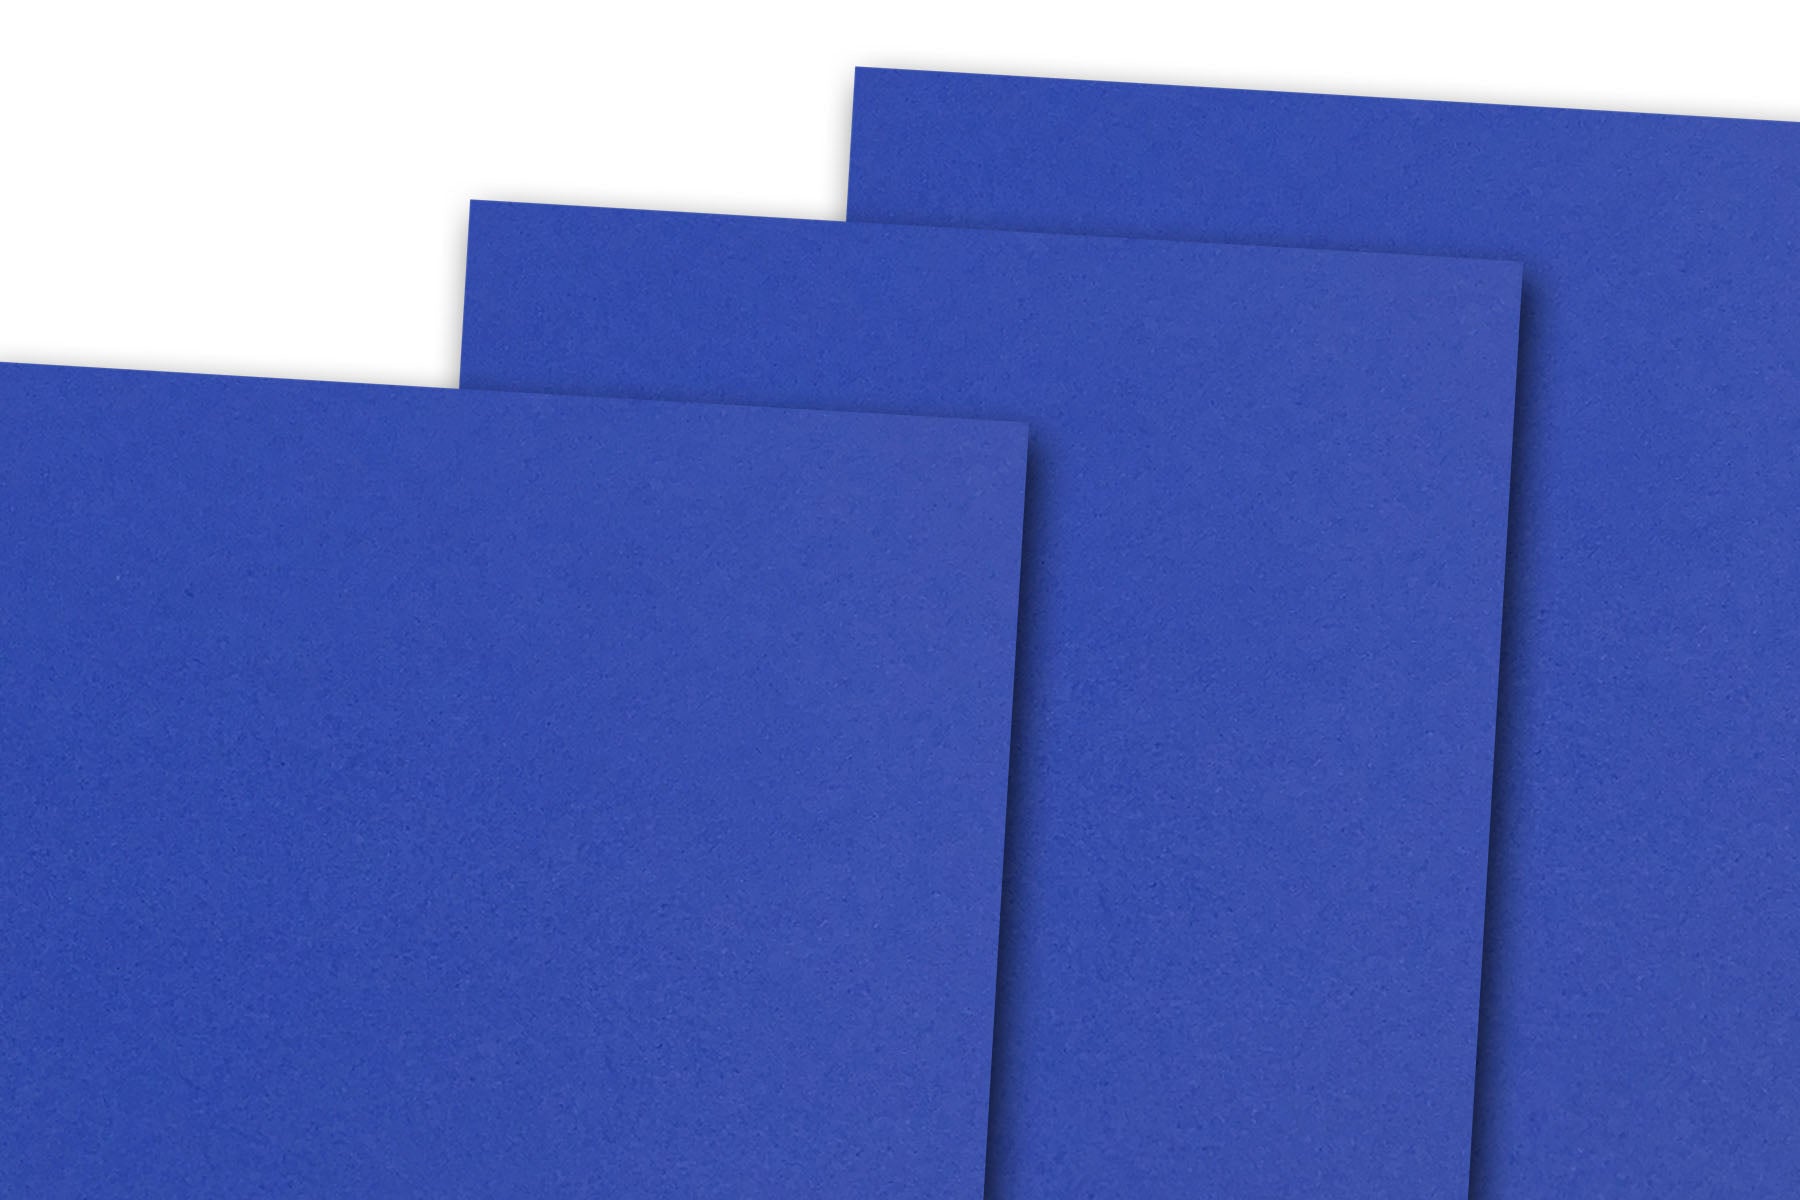  Always23 Blue Copy Paper, Colored Copy Paper 8.5 x